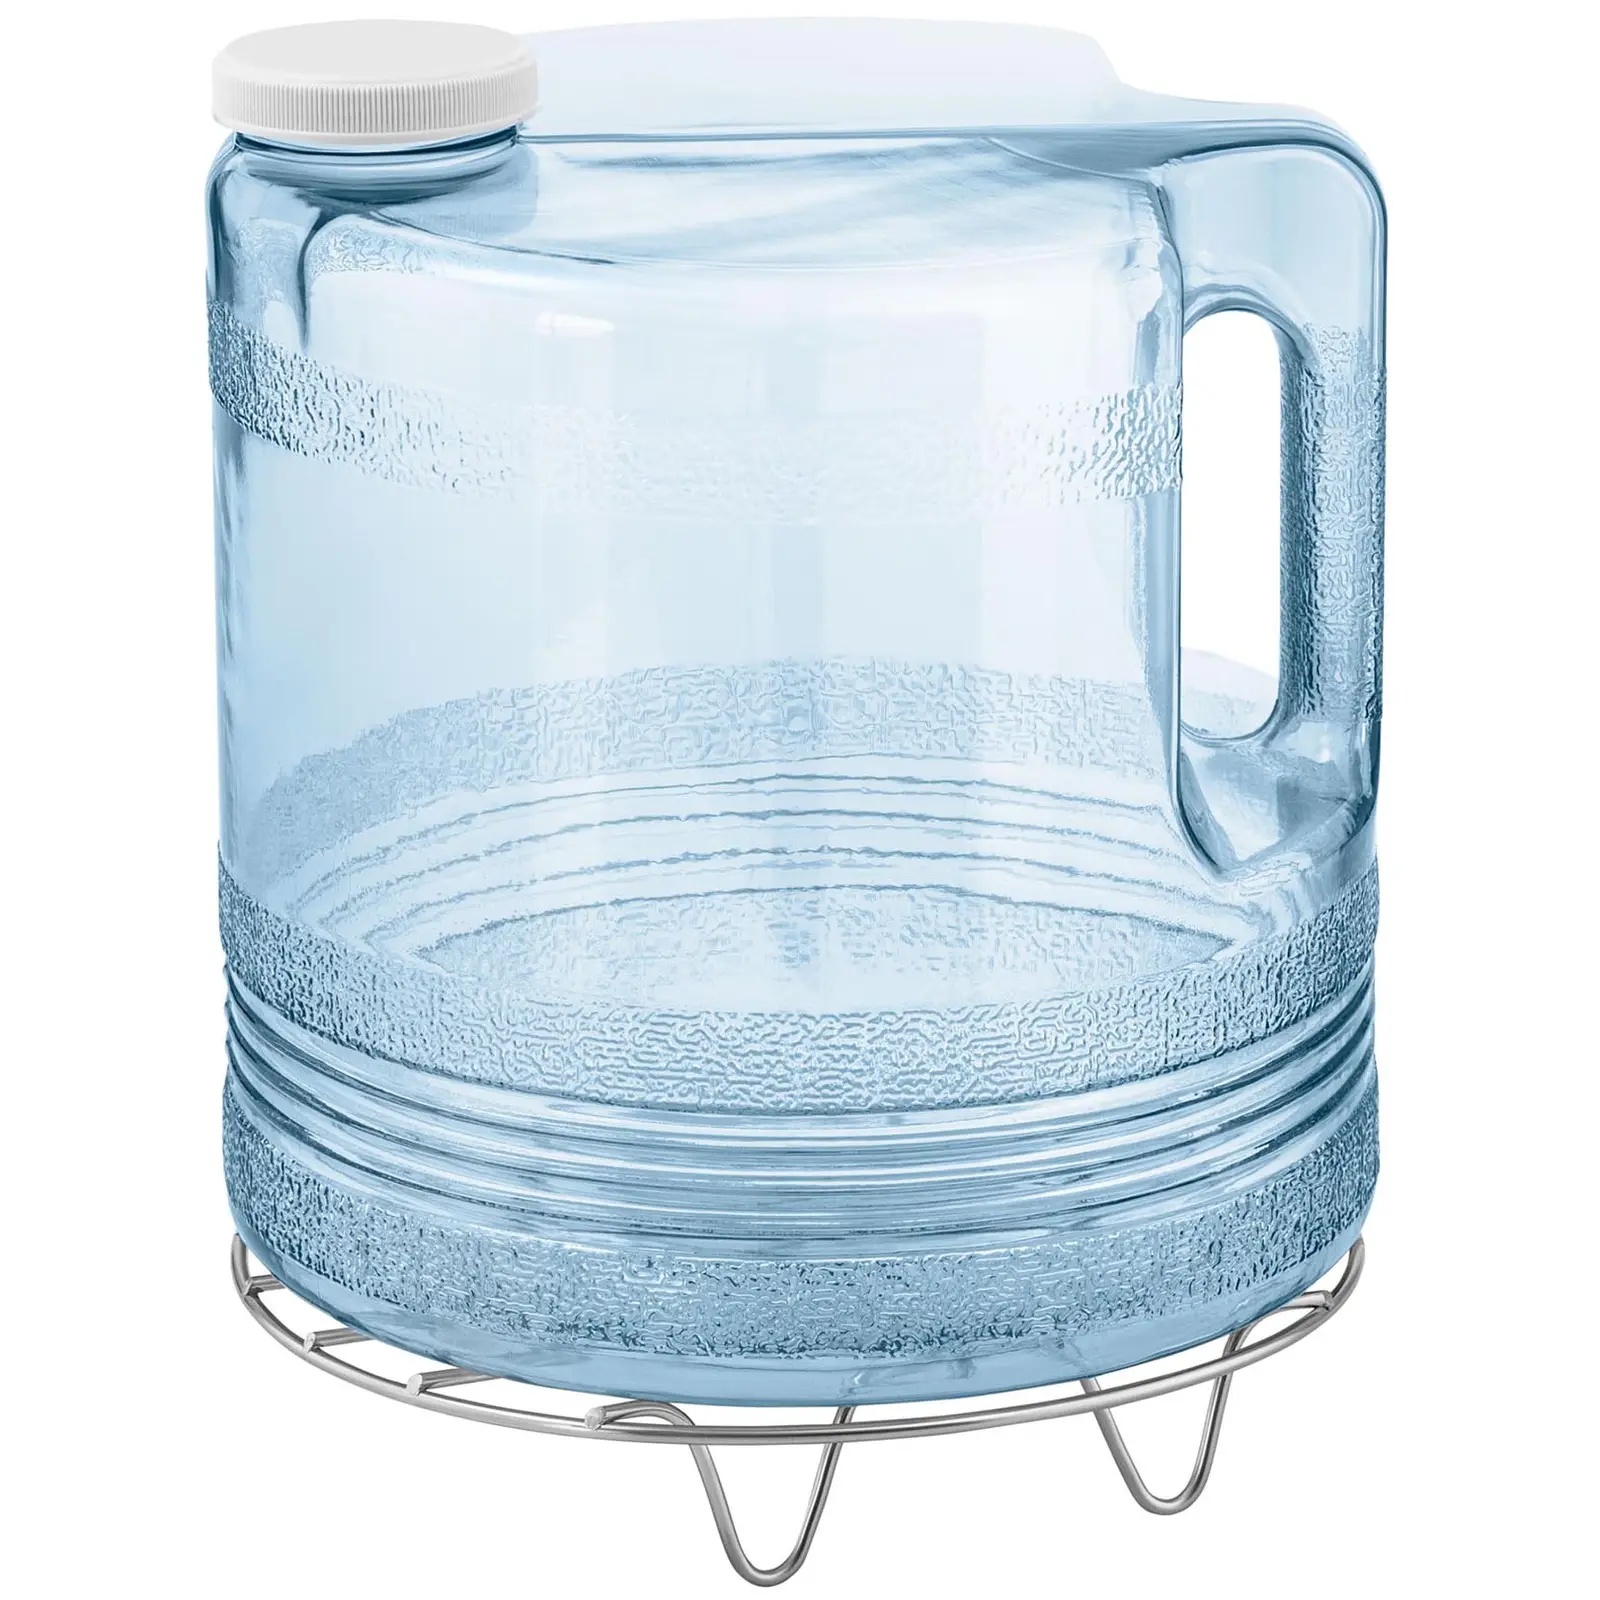 Water Distiller - water - 4 L - adjustable temperature